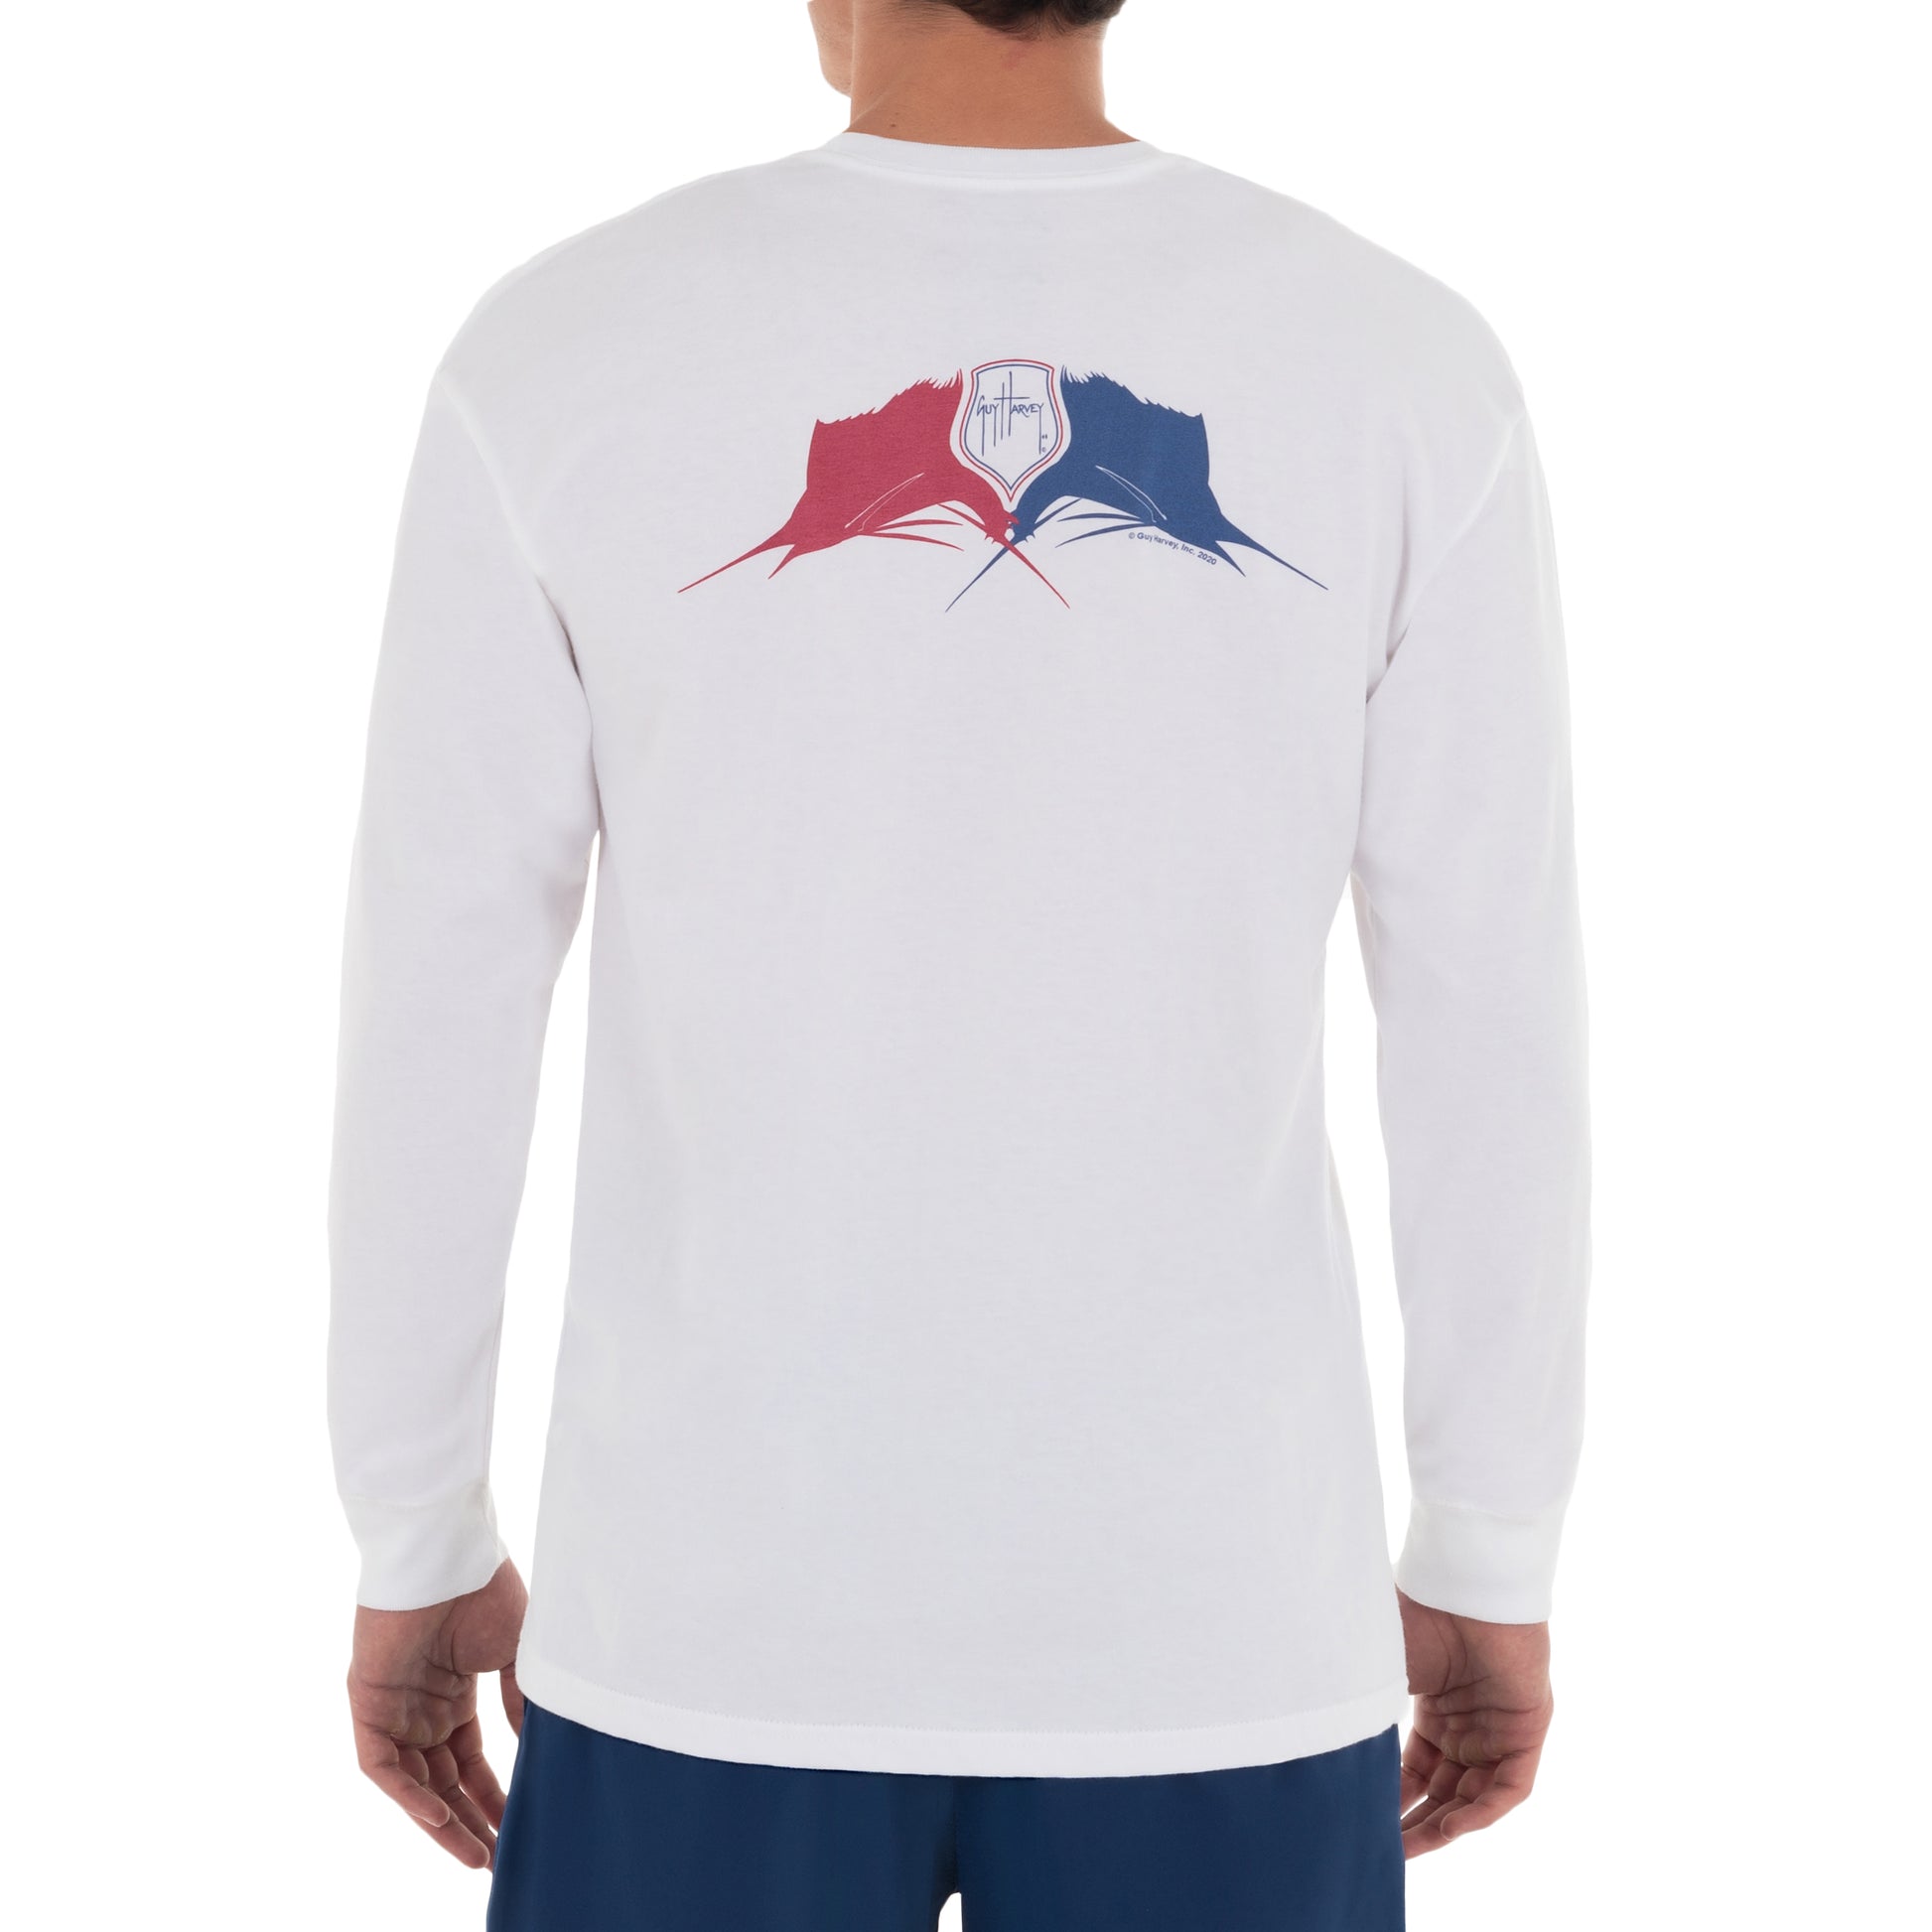 Men's Performance Fishing Shirts & Apparel – tagged LONG SLEEVE COTTON  TEES – Guy Harvey